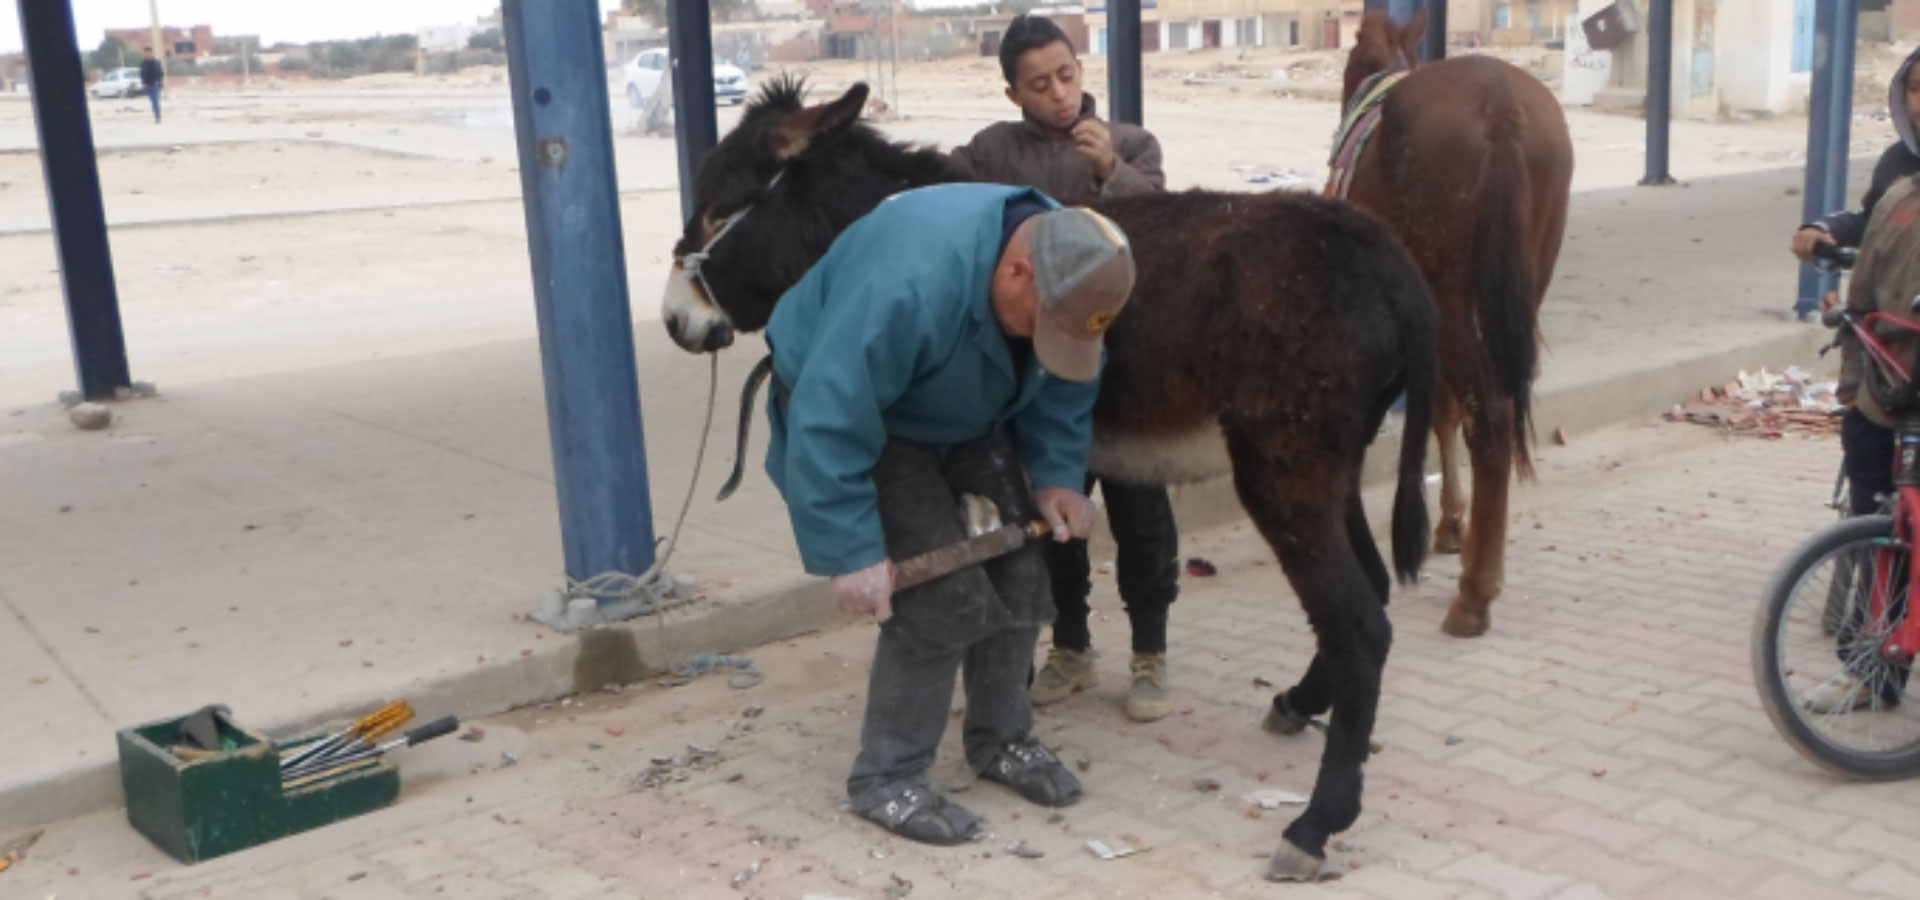 Man and children near brown donkey